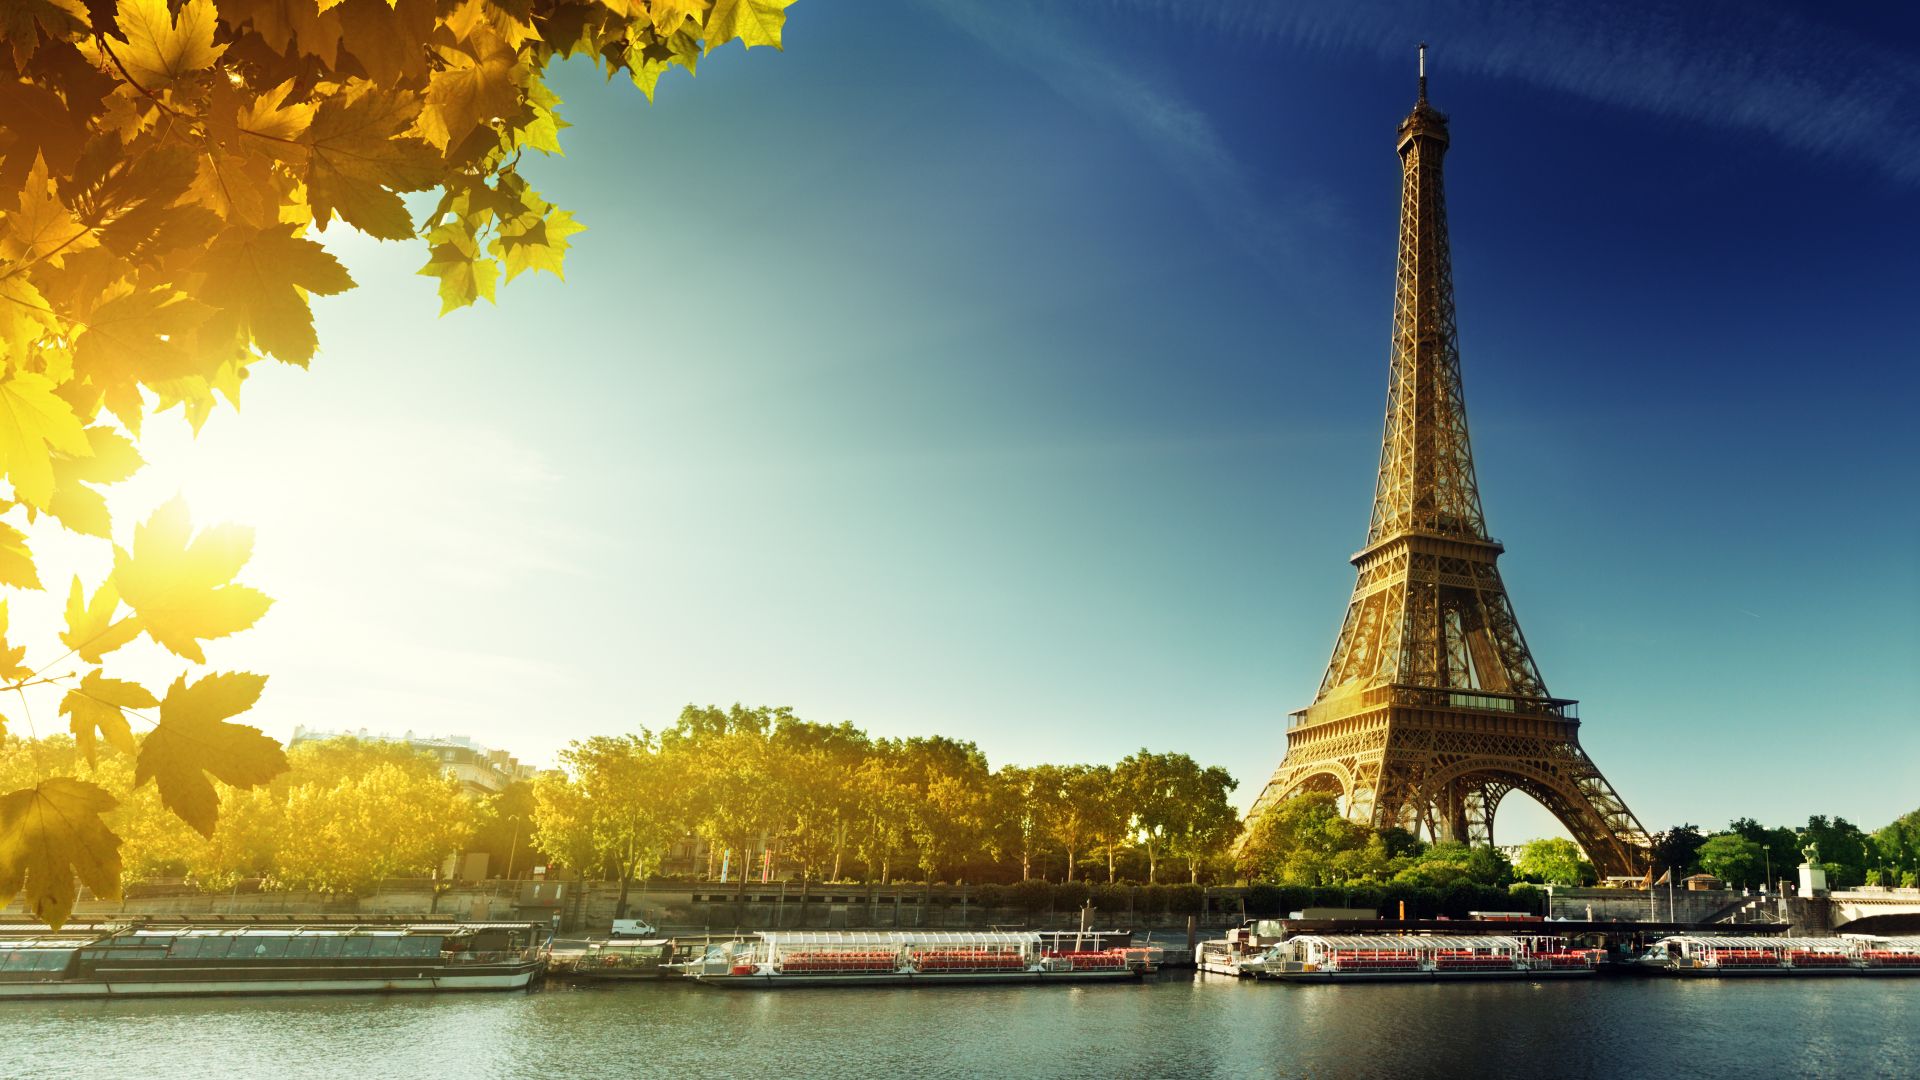 Париж, Эйфелева башня, Франция, осень, путешествия, туризм, Paris, Eiffel Tower, France, autumn, travel, tourism (horizontal)